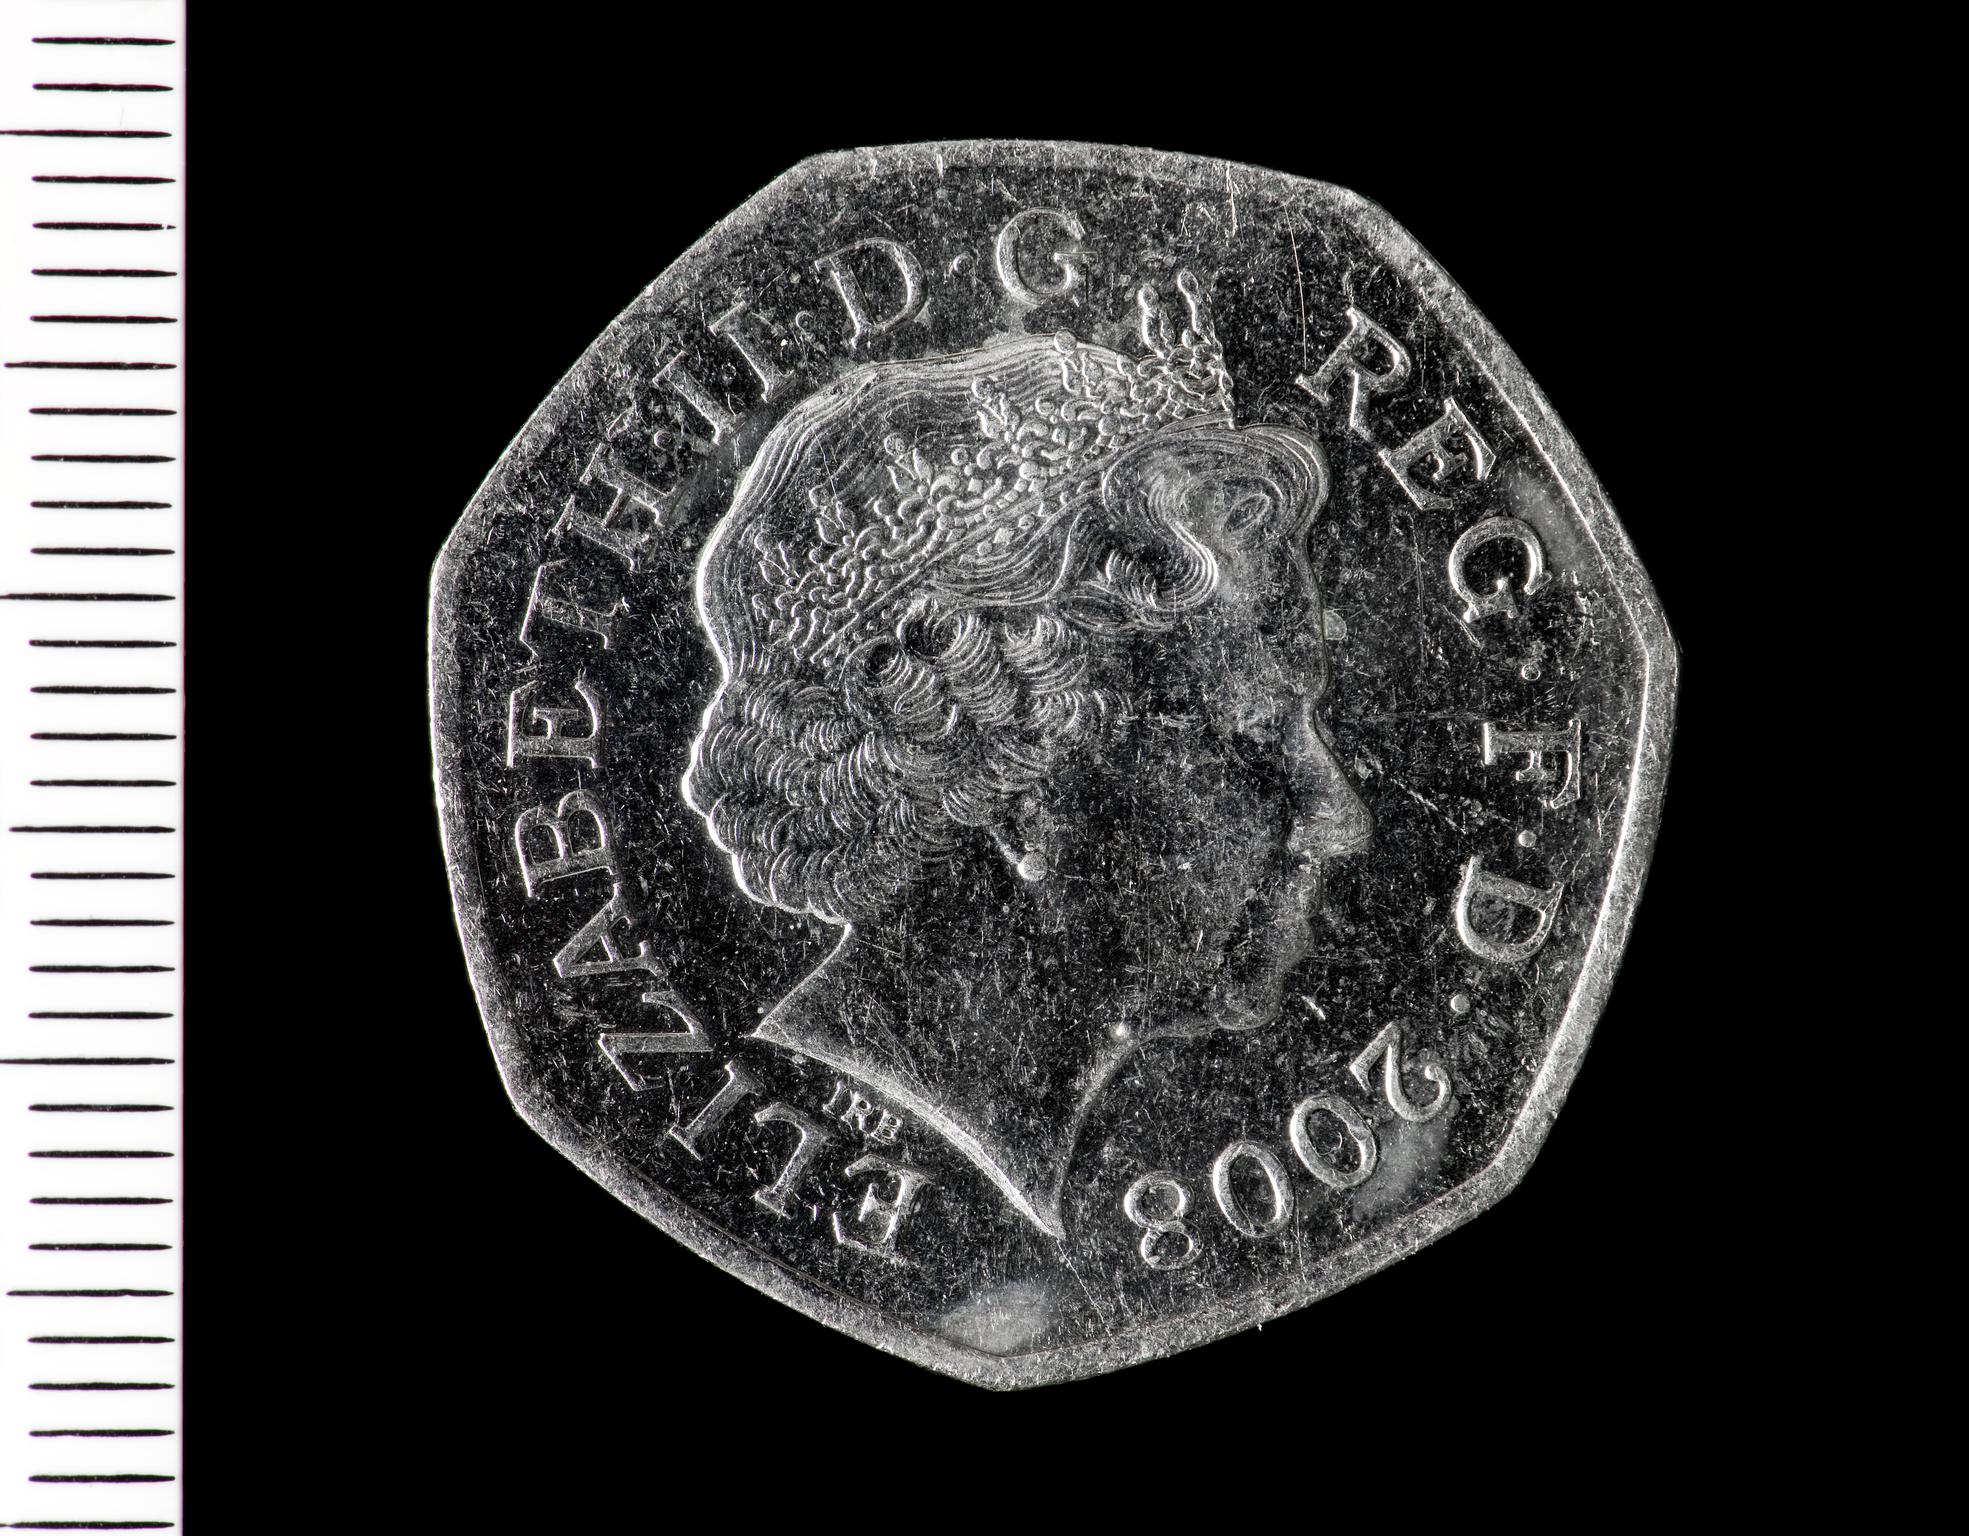 Elizabeth II fifty pence (Royal Arms design)